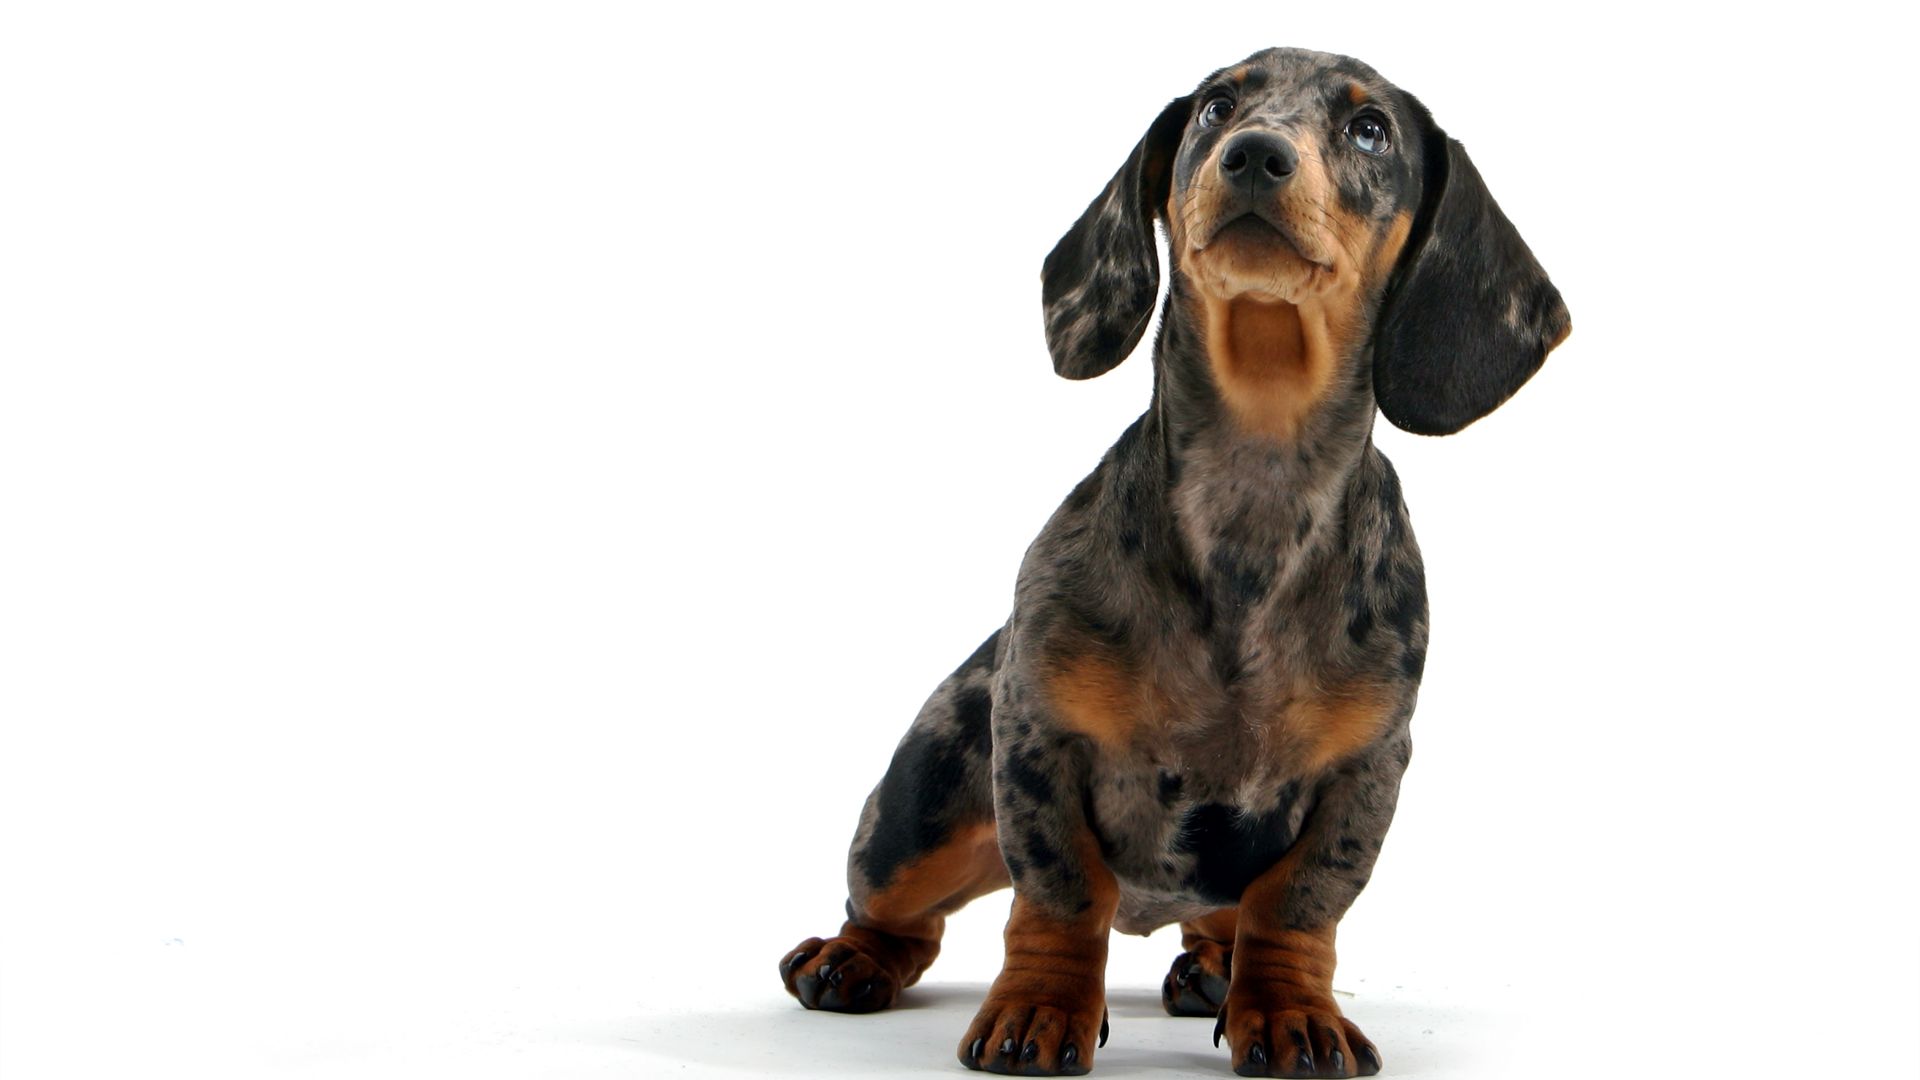 Wallpaper Cute Dachshund dog animal